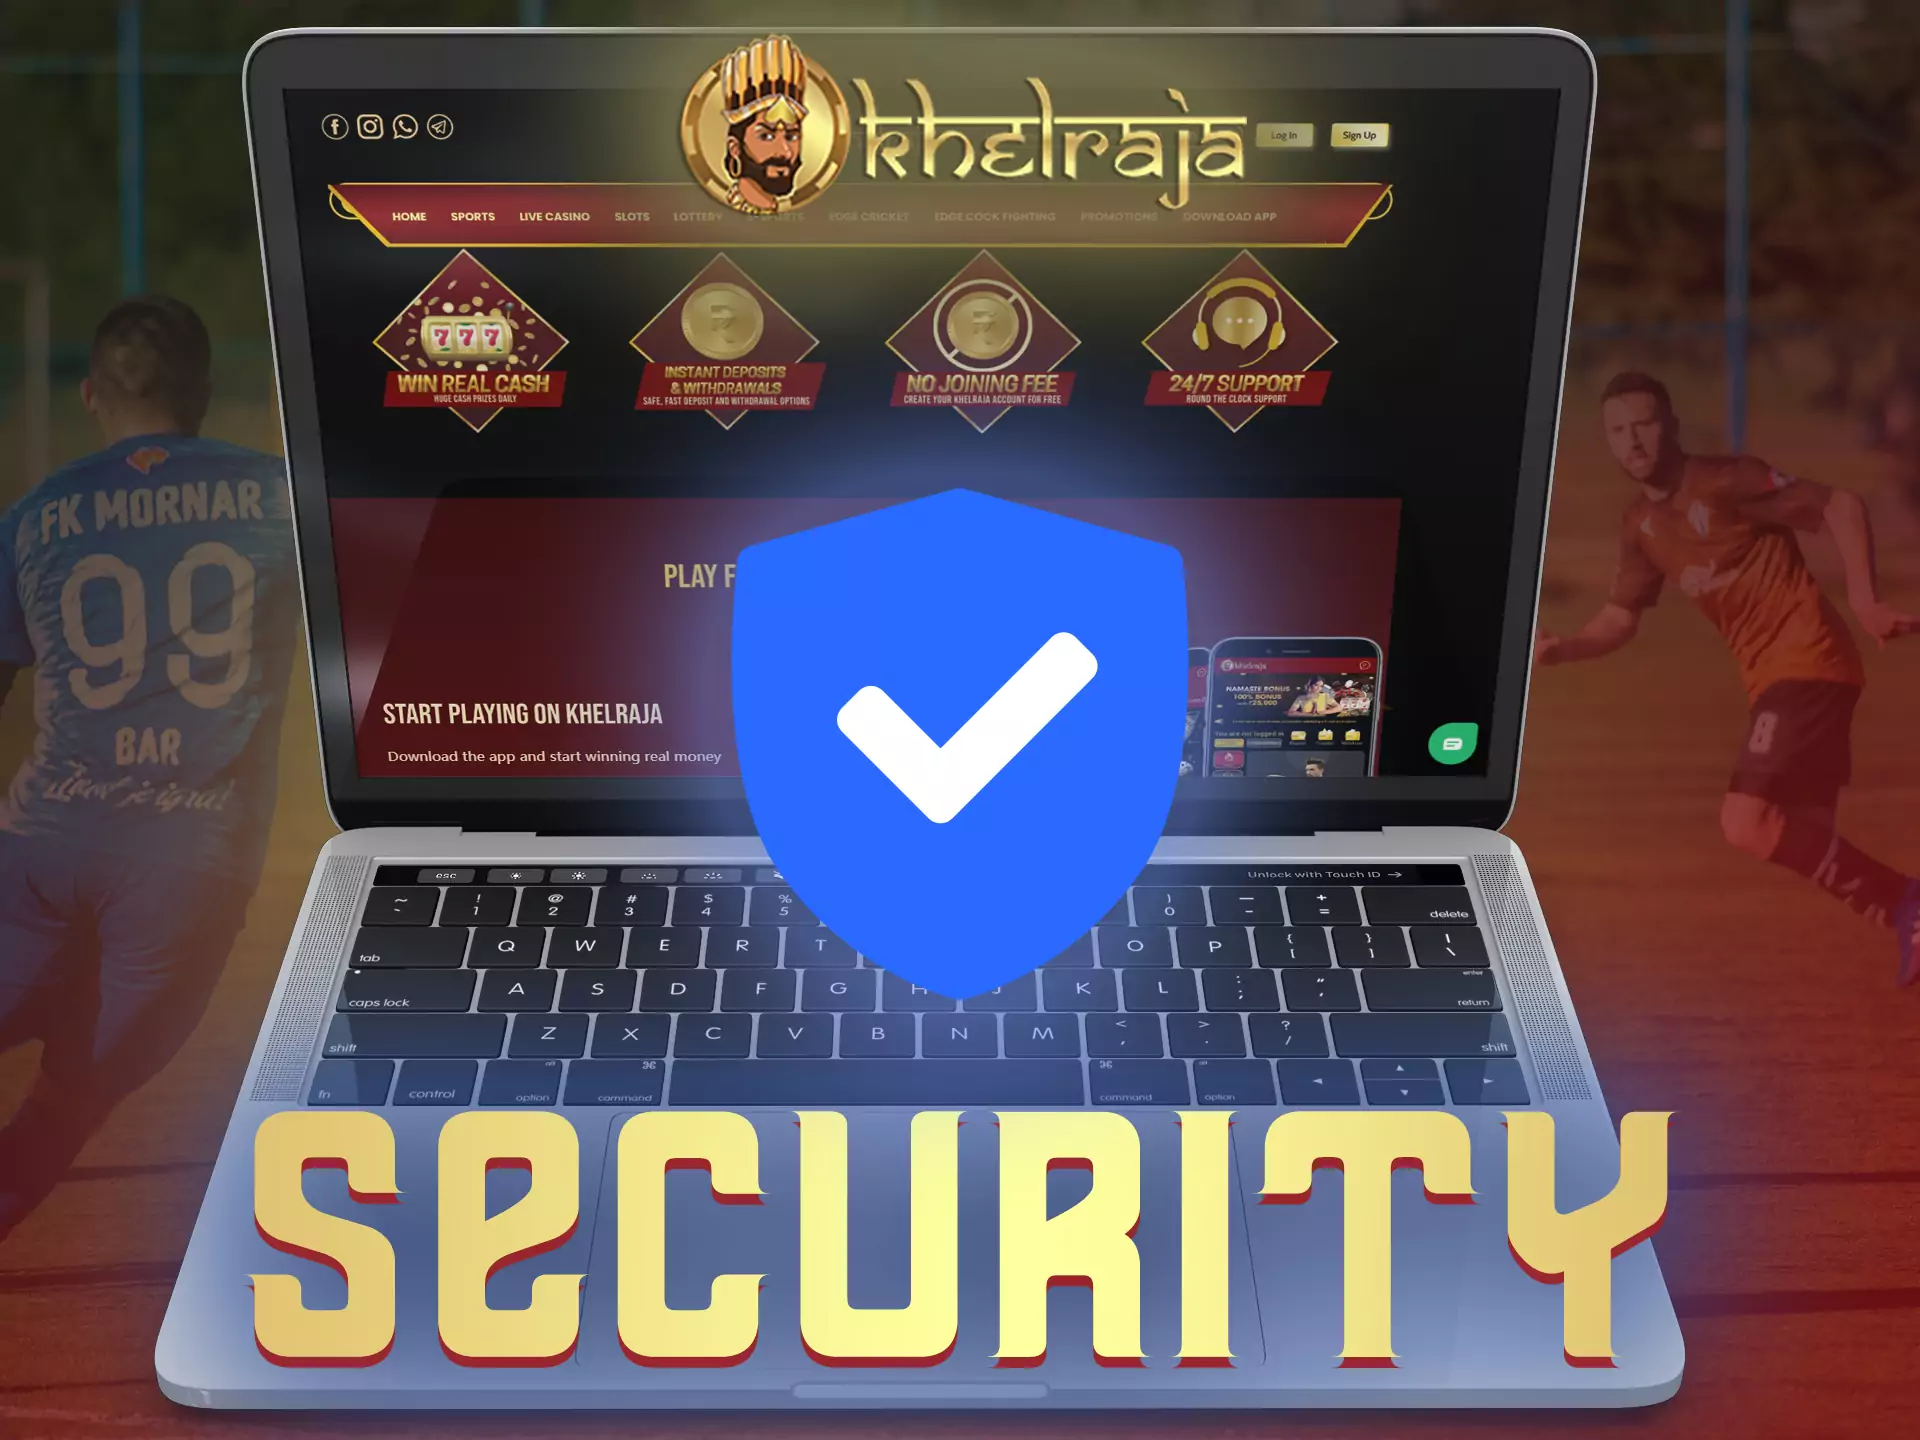 The Khelraja website provides safe and secure online services.